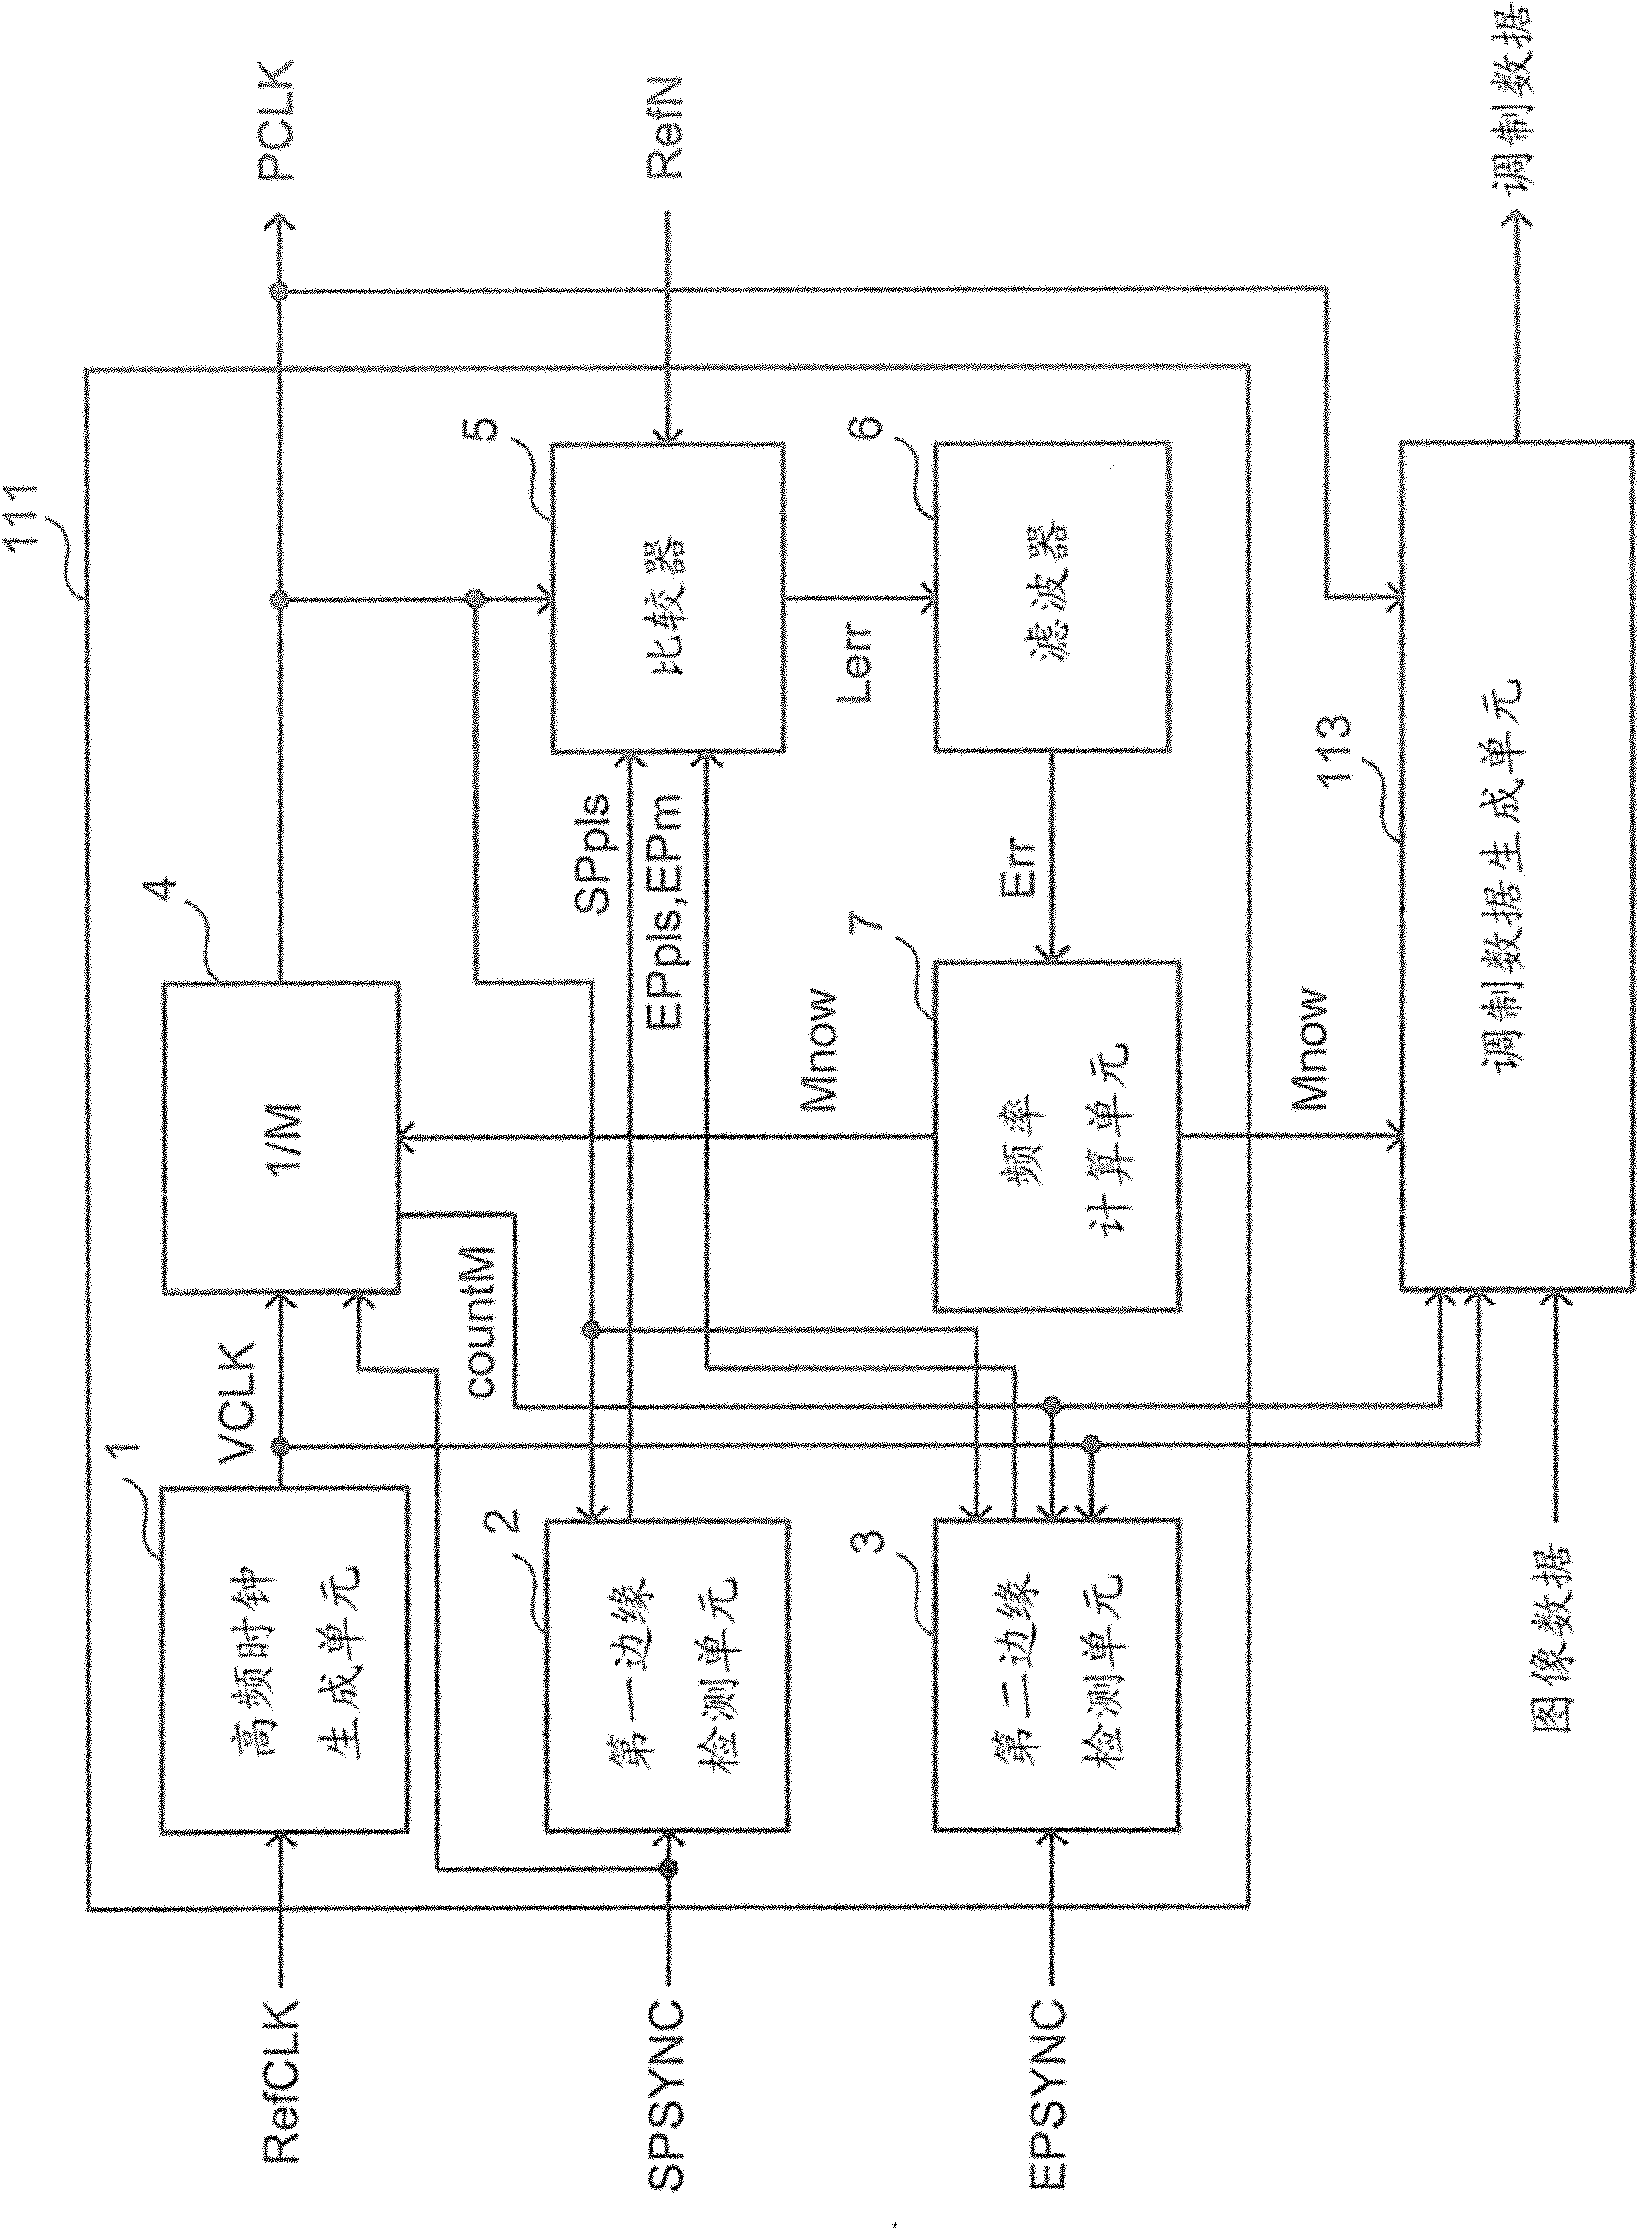 Pixel clock generator and image forming apparatus